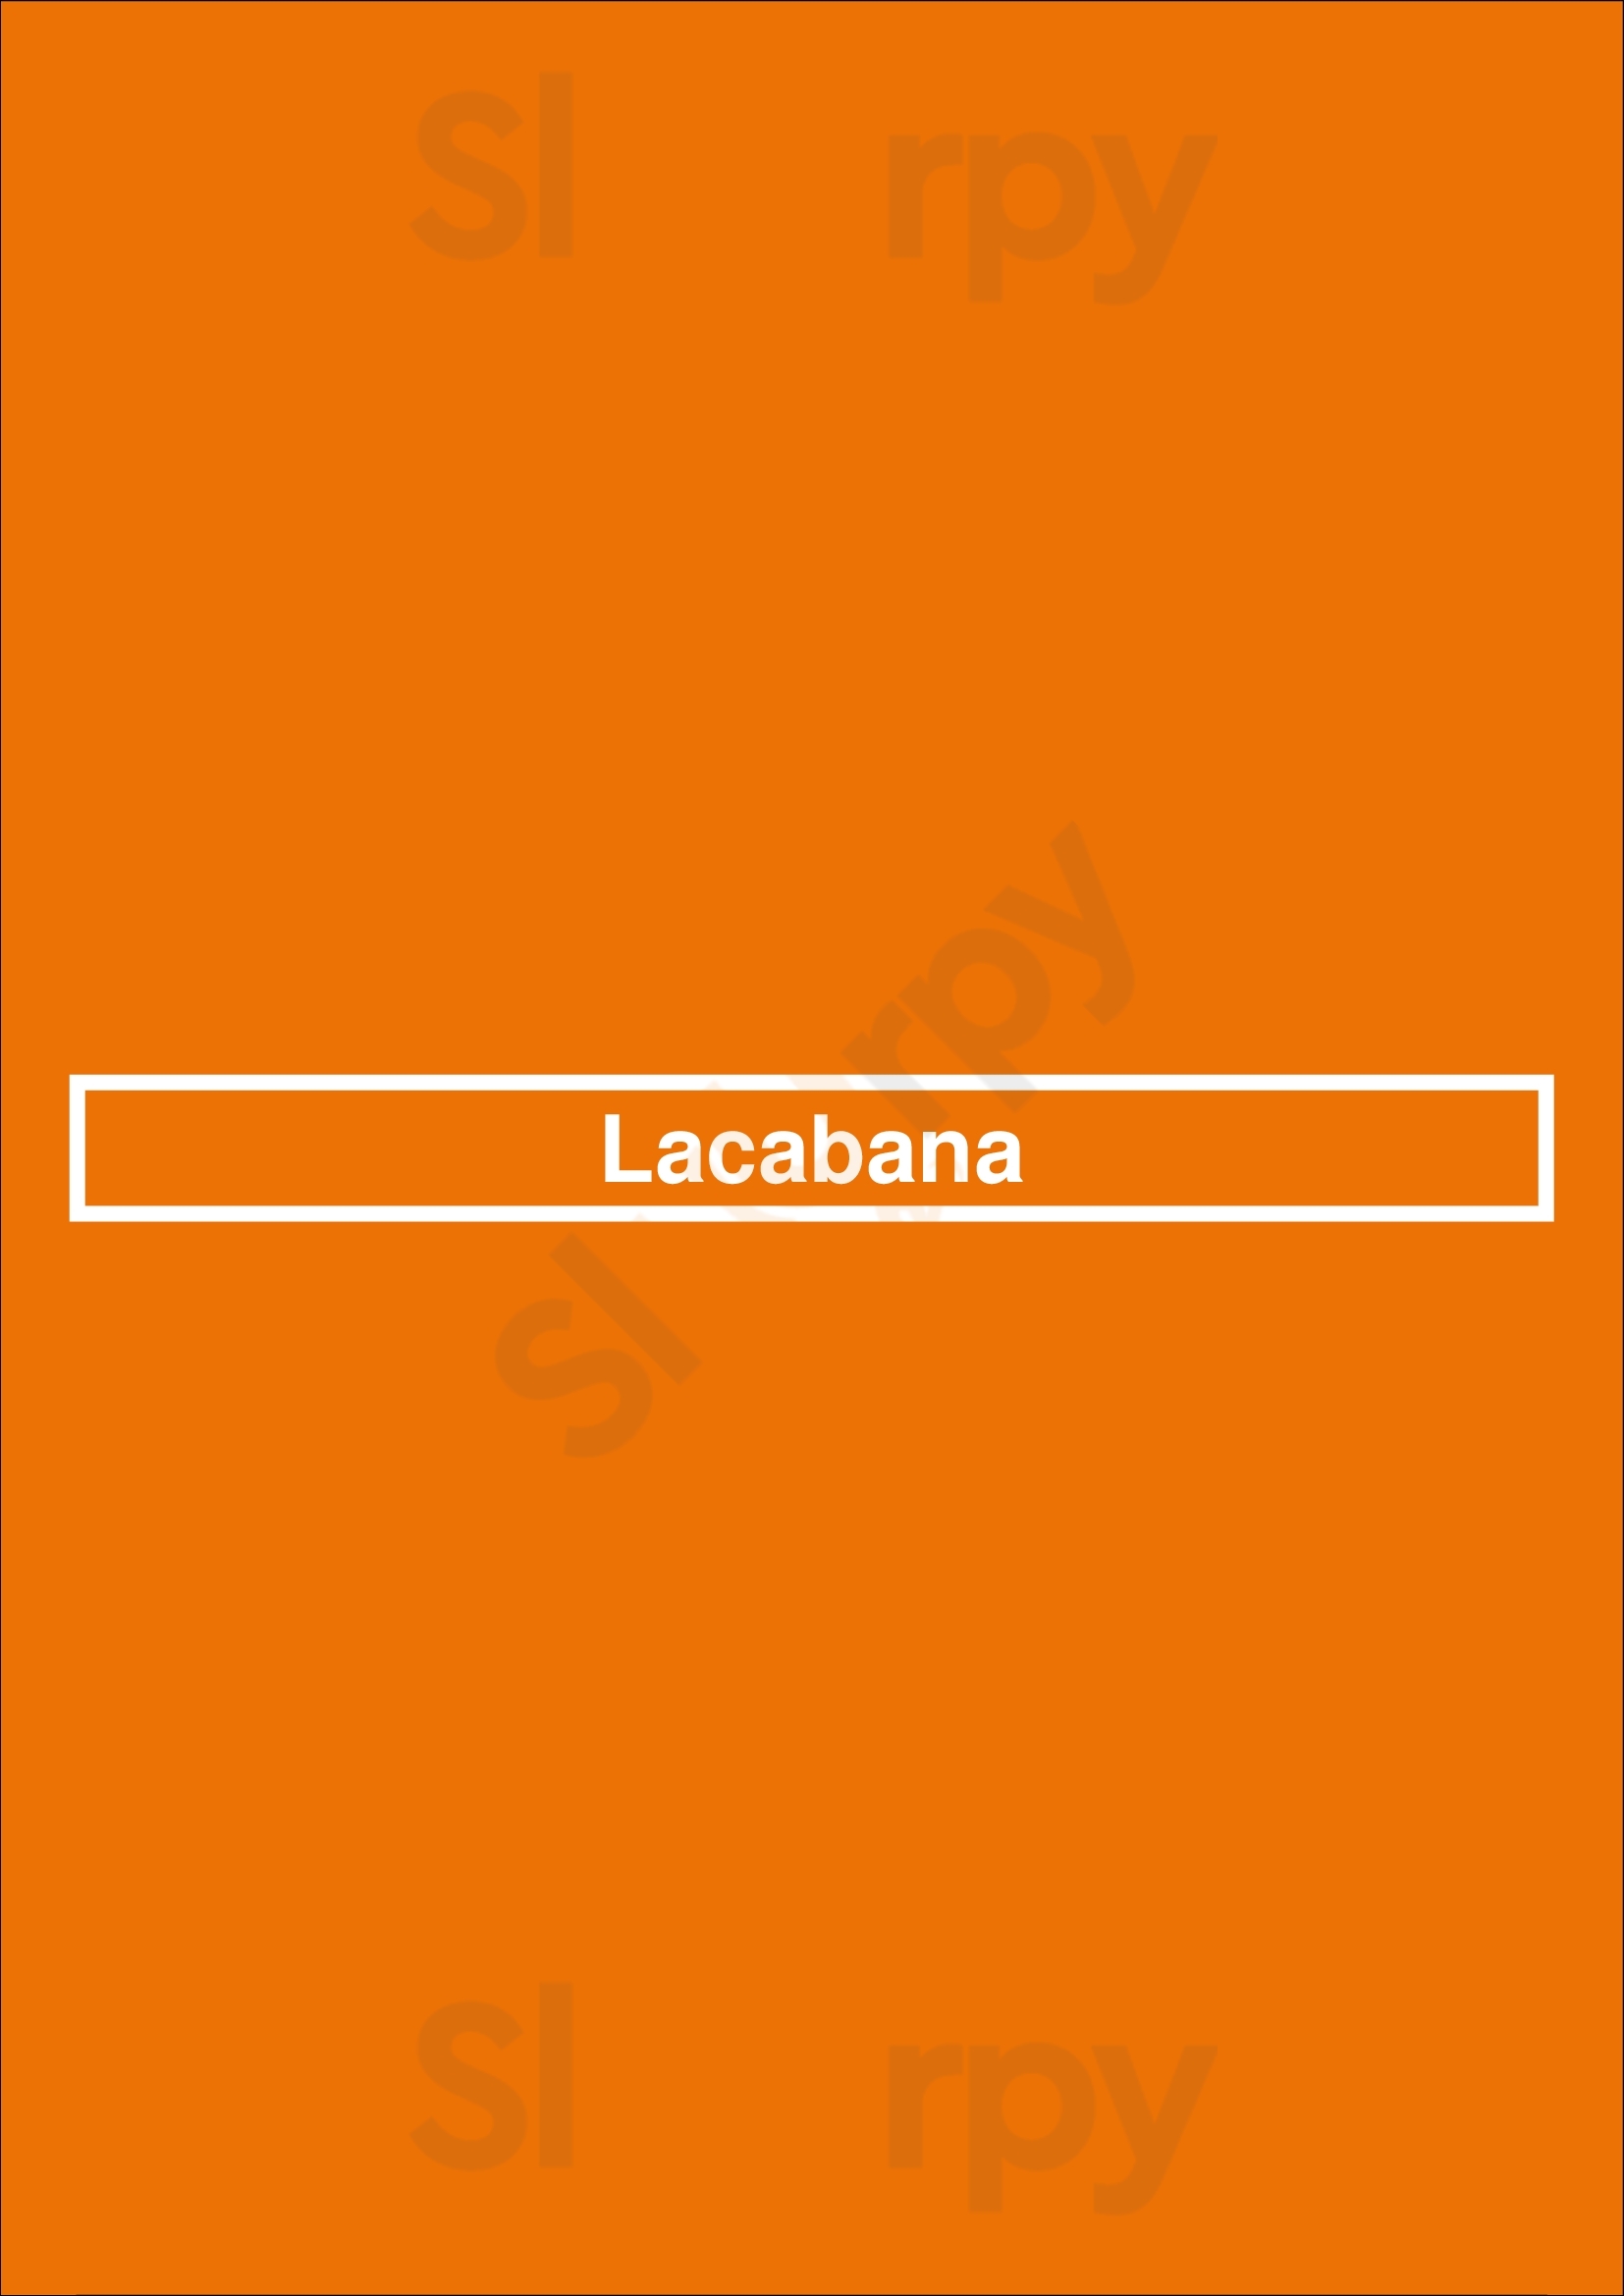 Lacabana Buenos Aires Menu - 1